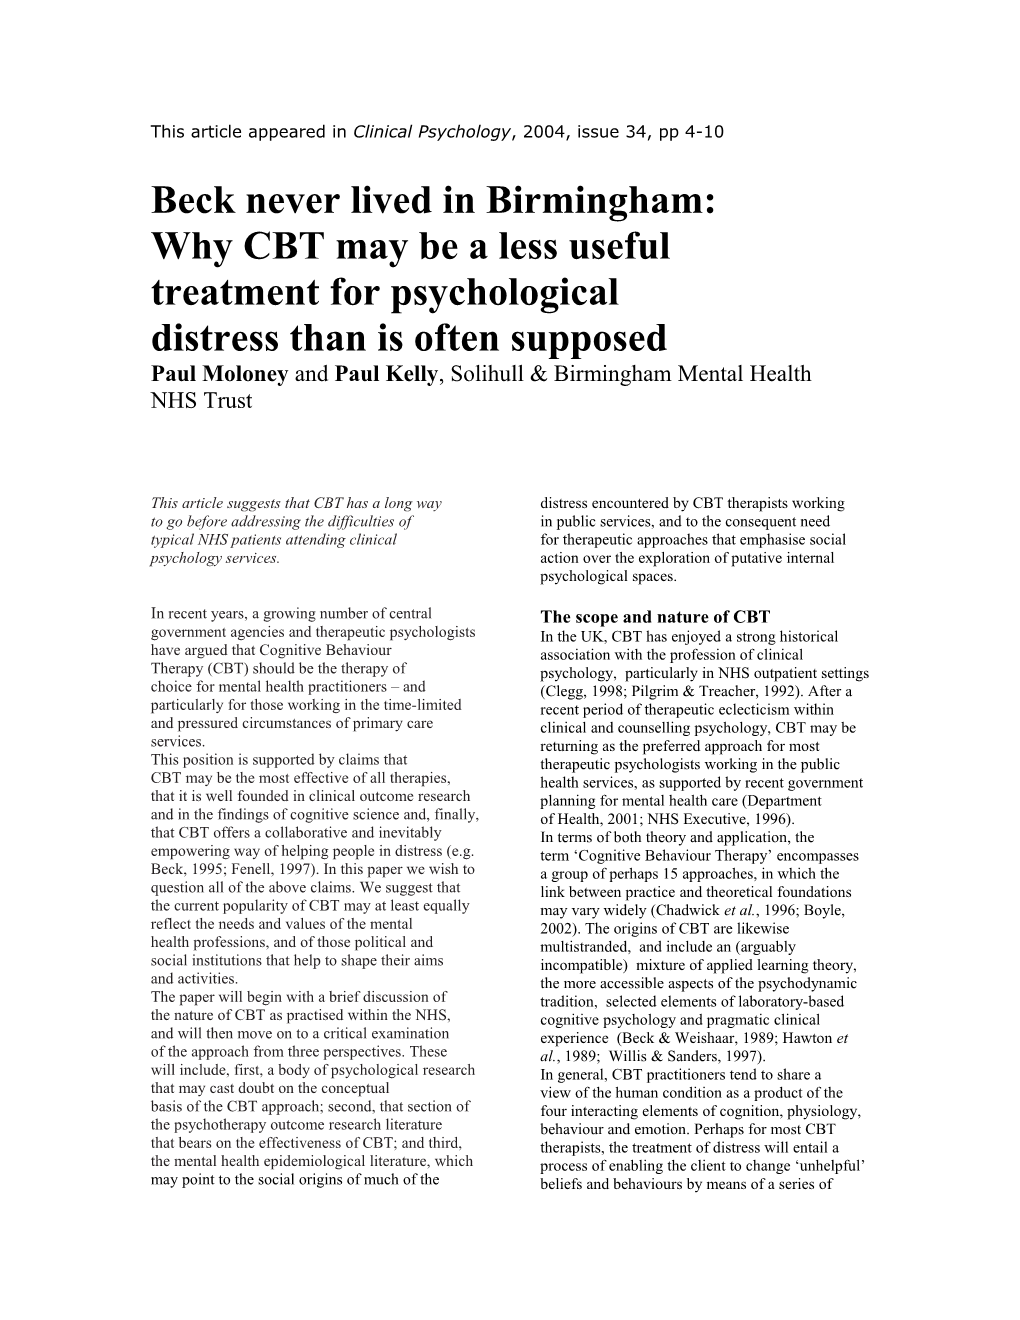 Beck Never Lived in Birmingham